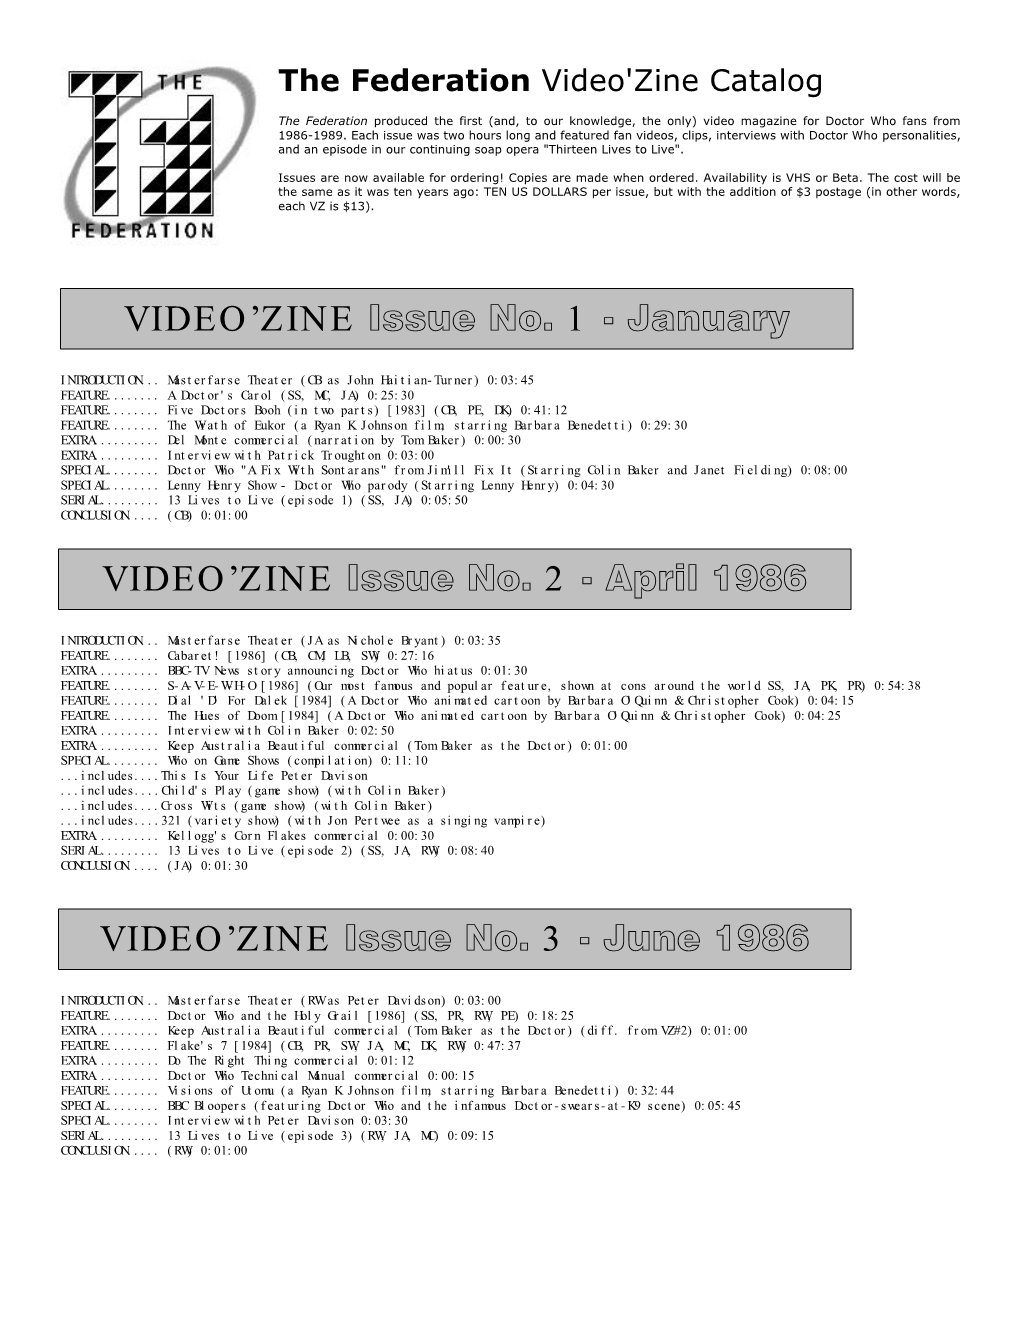 Video'zine Catalog in Adobe PDF Format